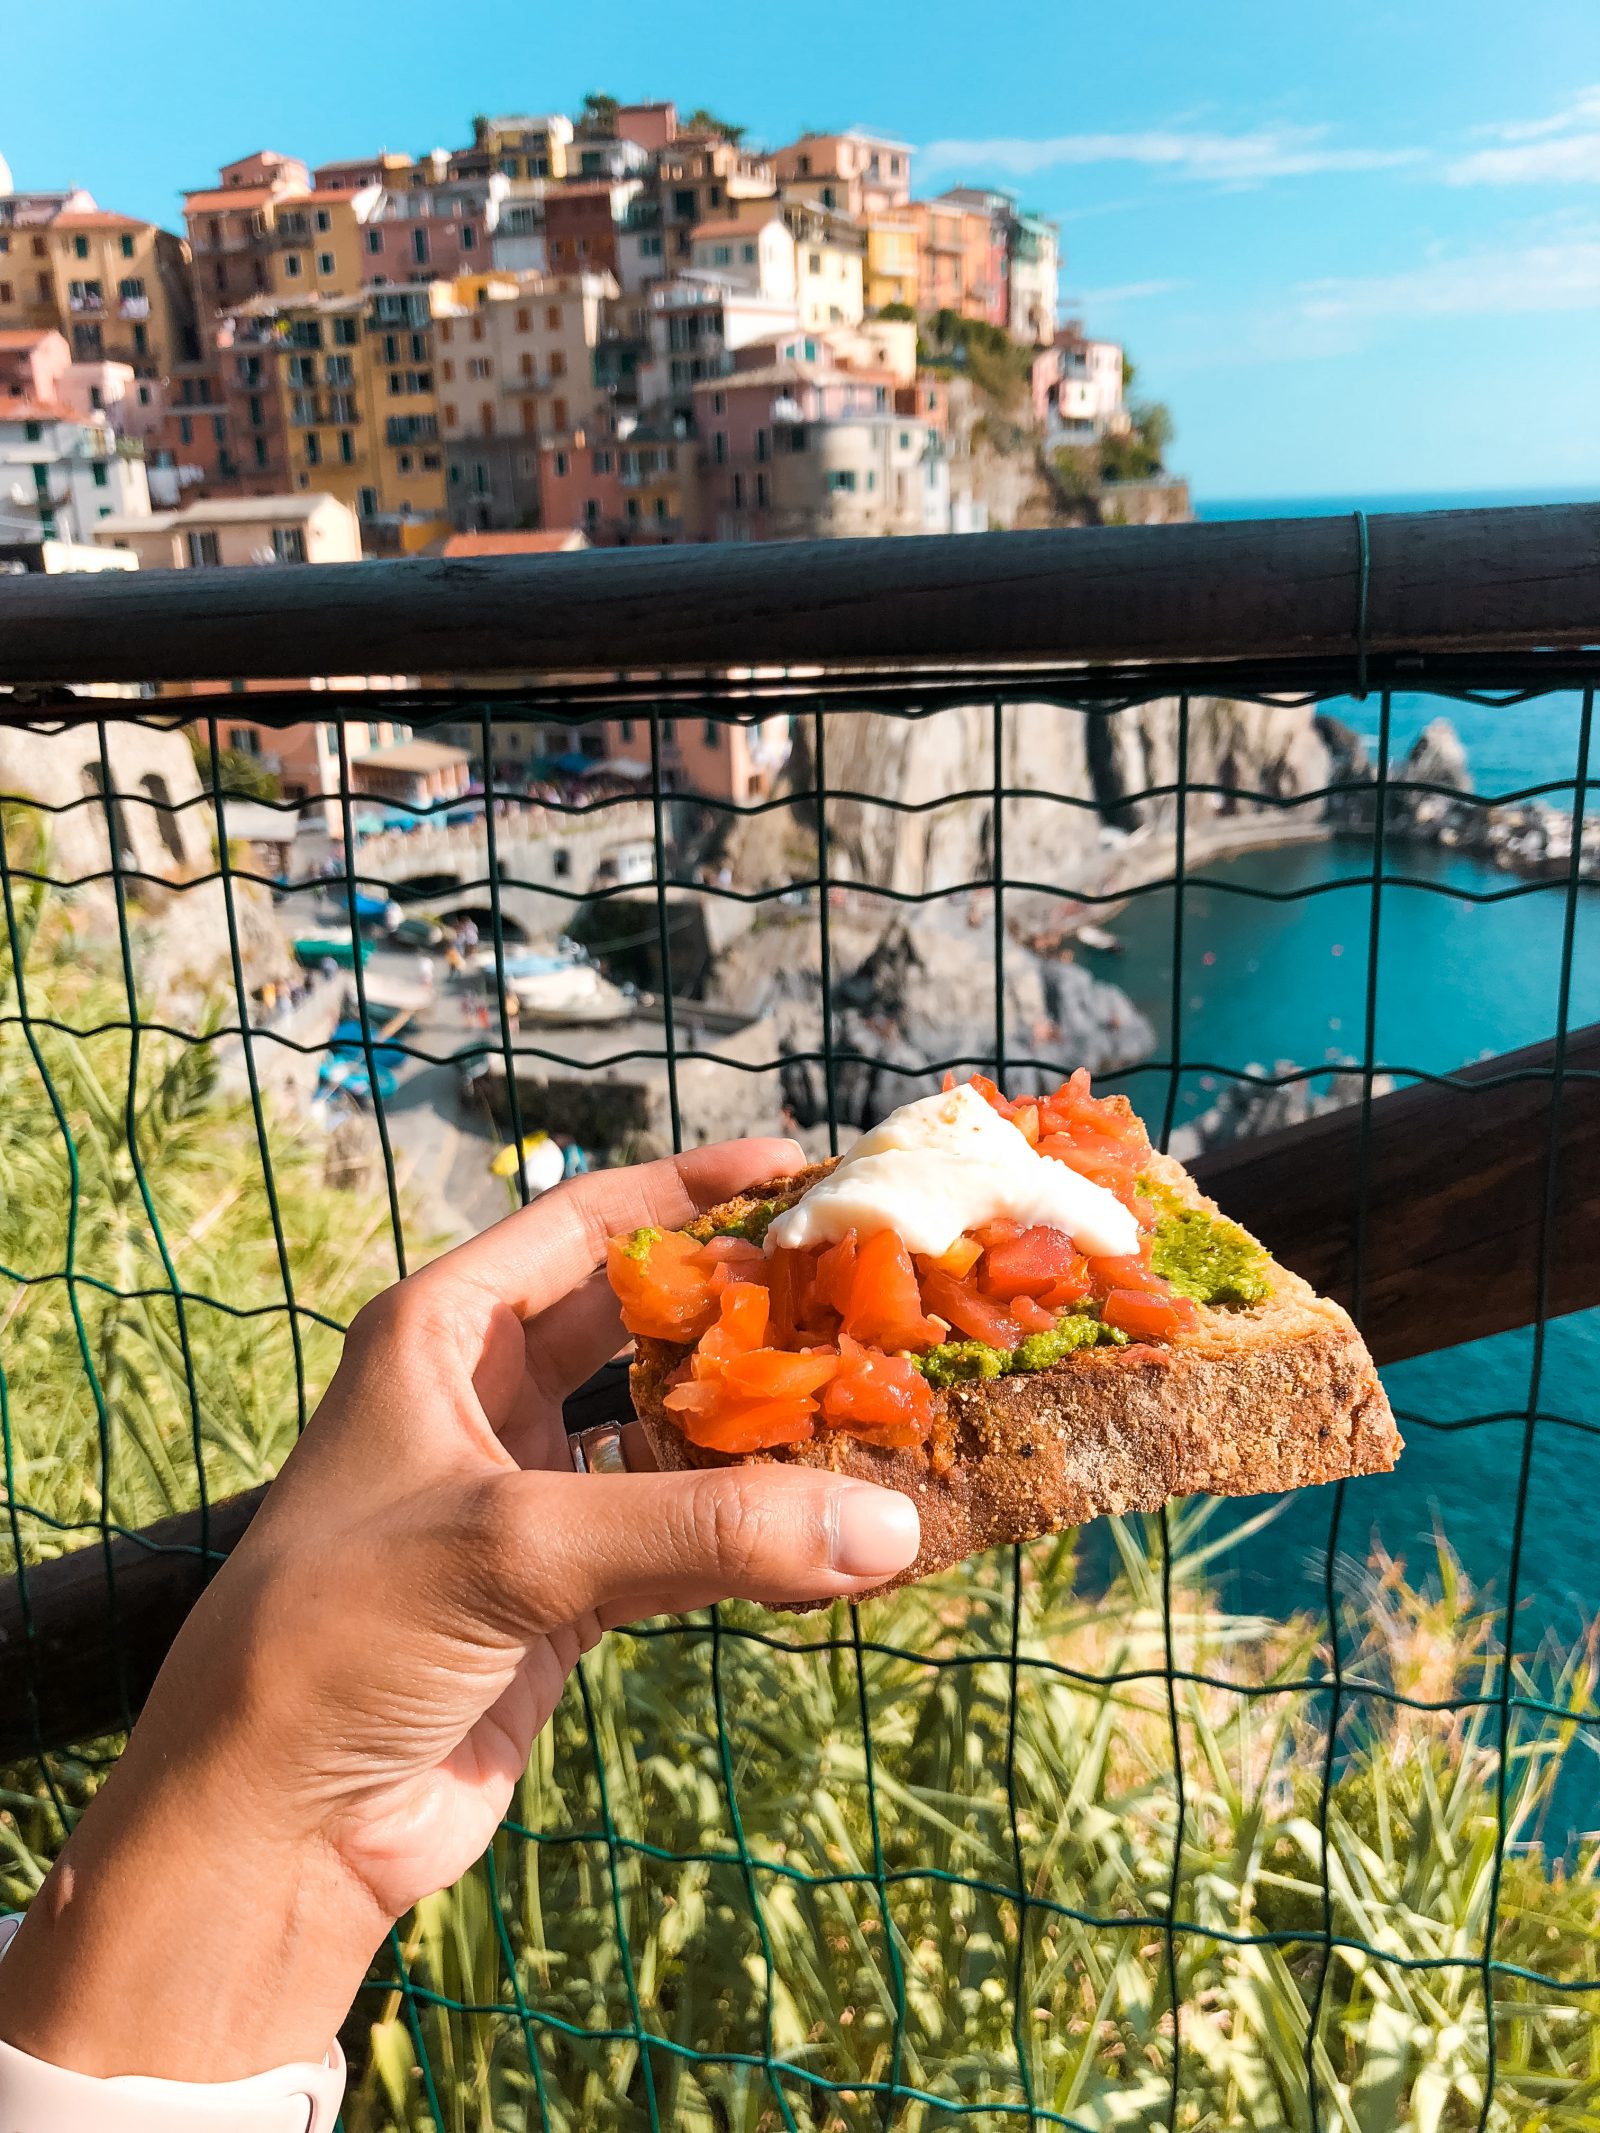 tomatoes, pesto, and ricotta on bread with Vernazza coastline in the backdrop